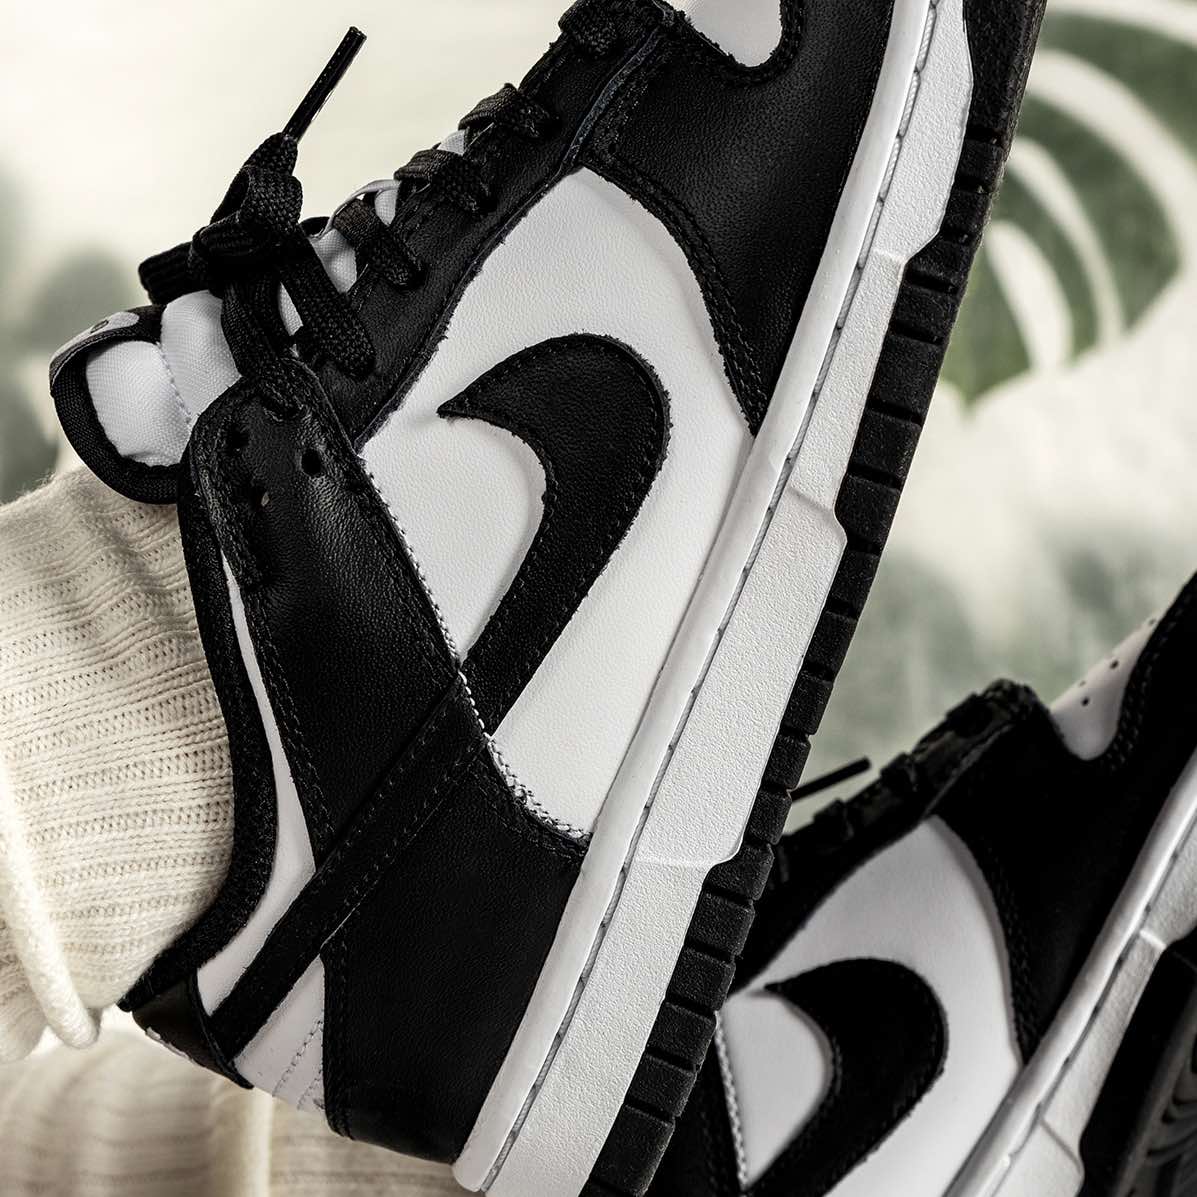 Nike Dunk Low
White / Black